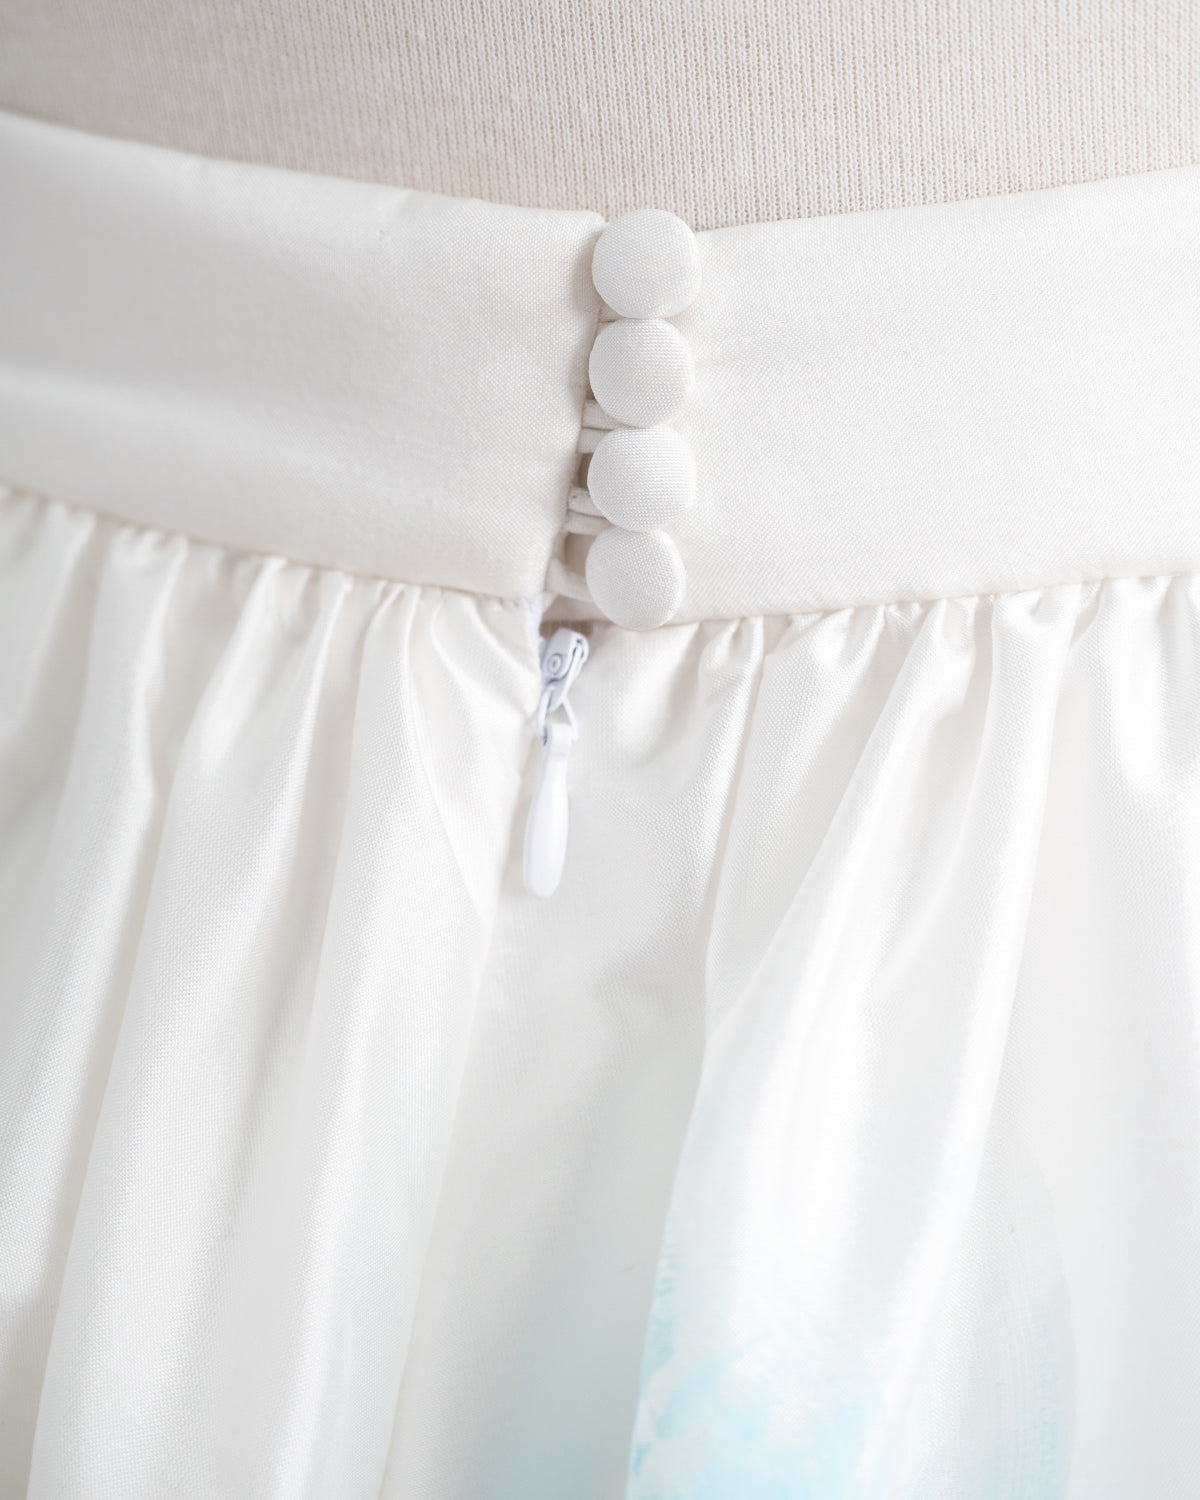 Dahlia Skirt No Sweep | Size 6 - Tiff Manuell